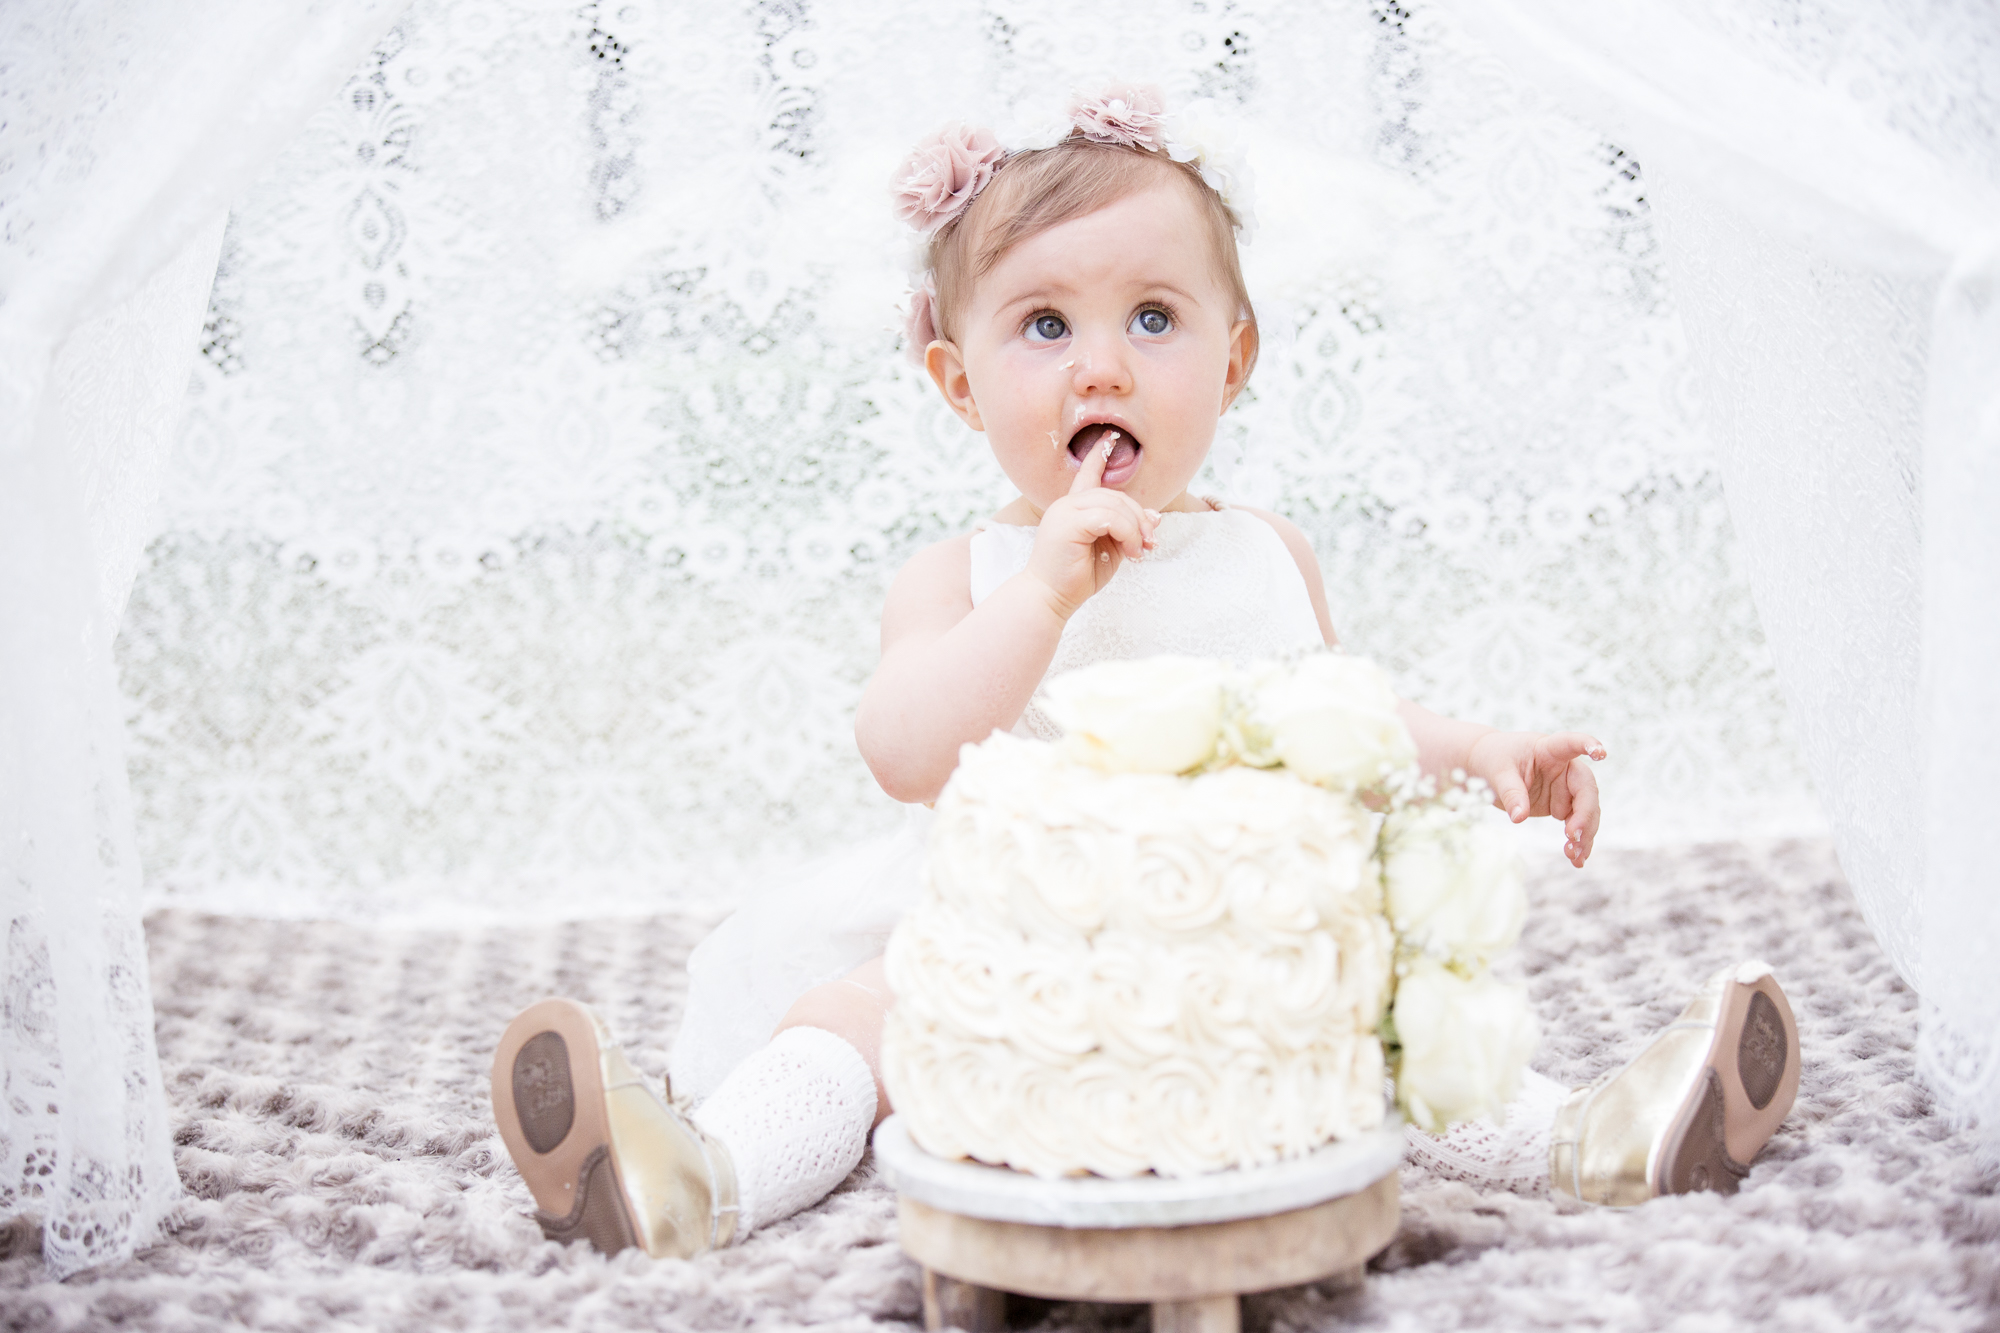 photographe famille oise picardie smash the cake 1 an bébé